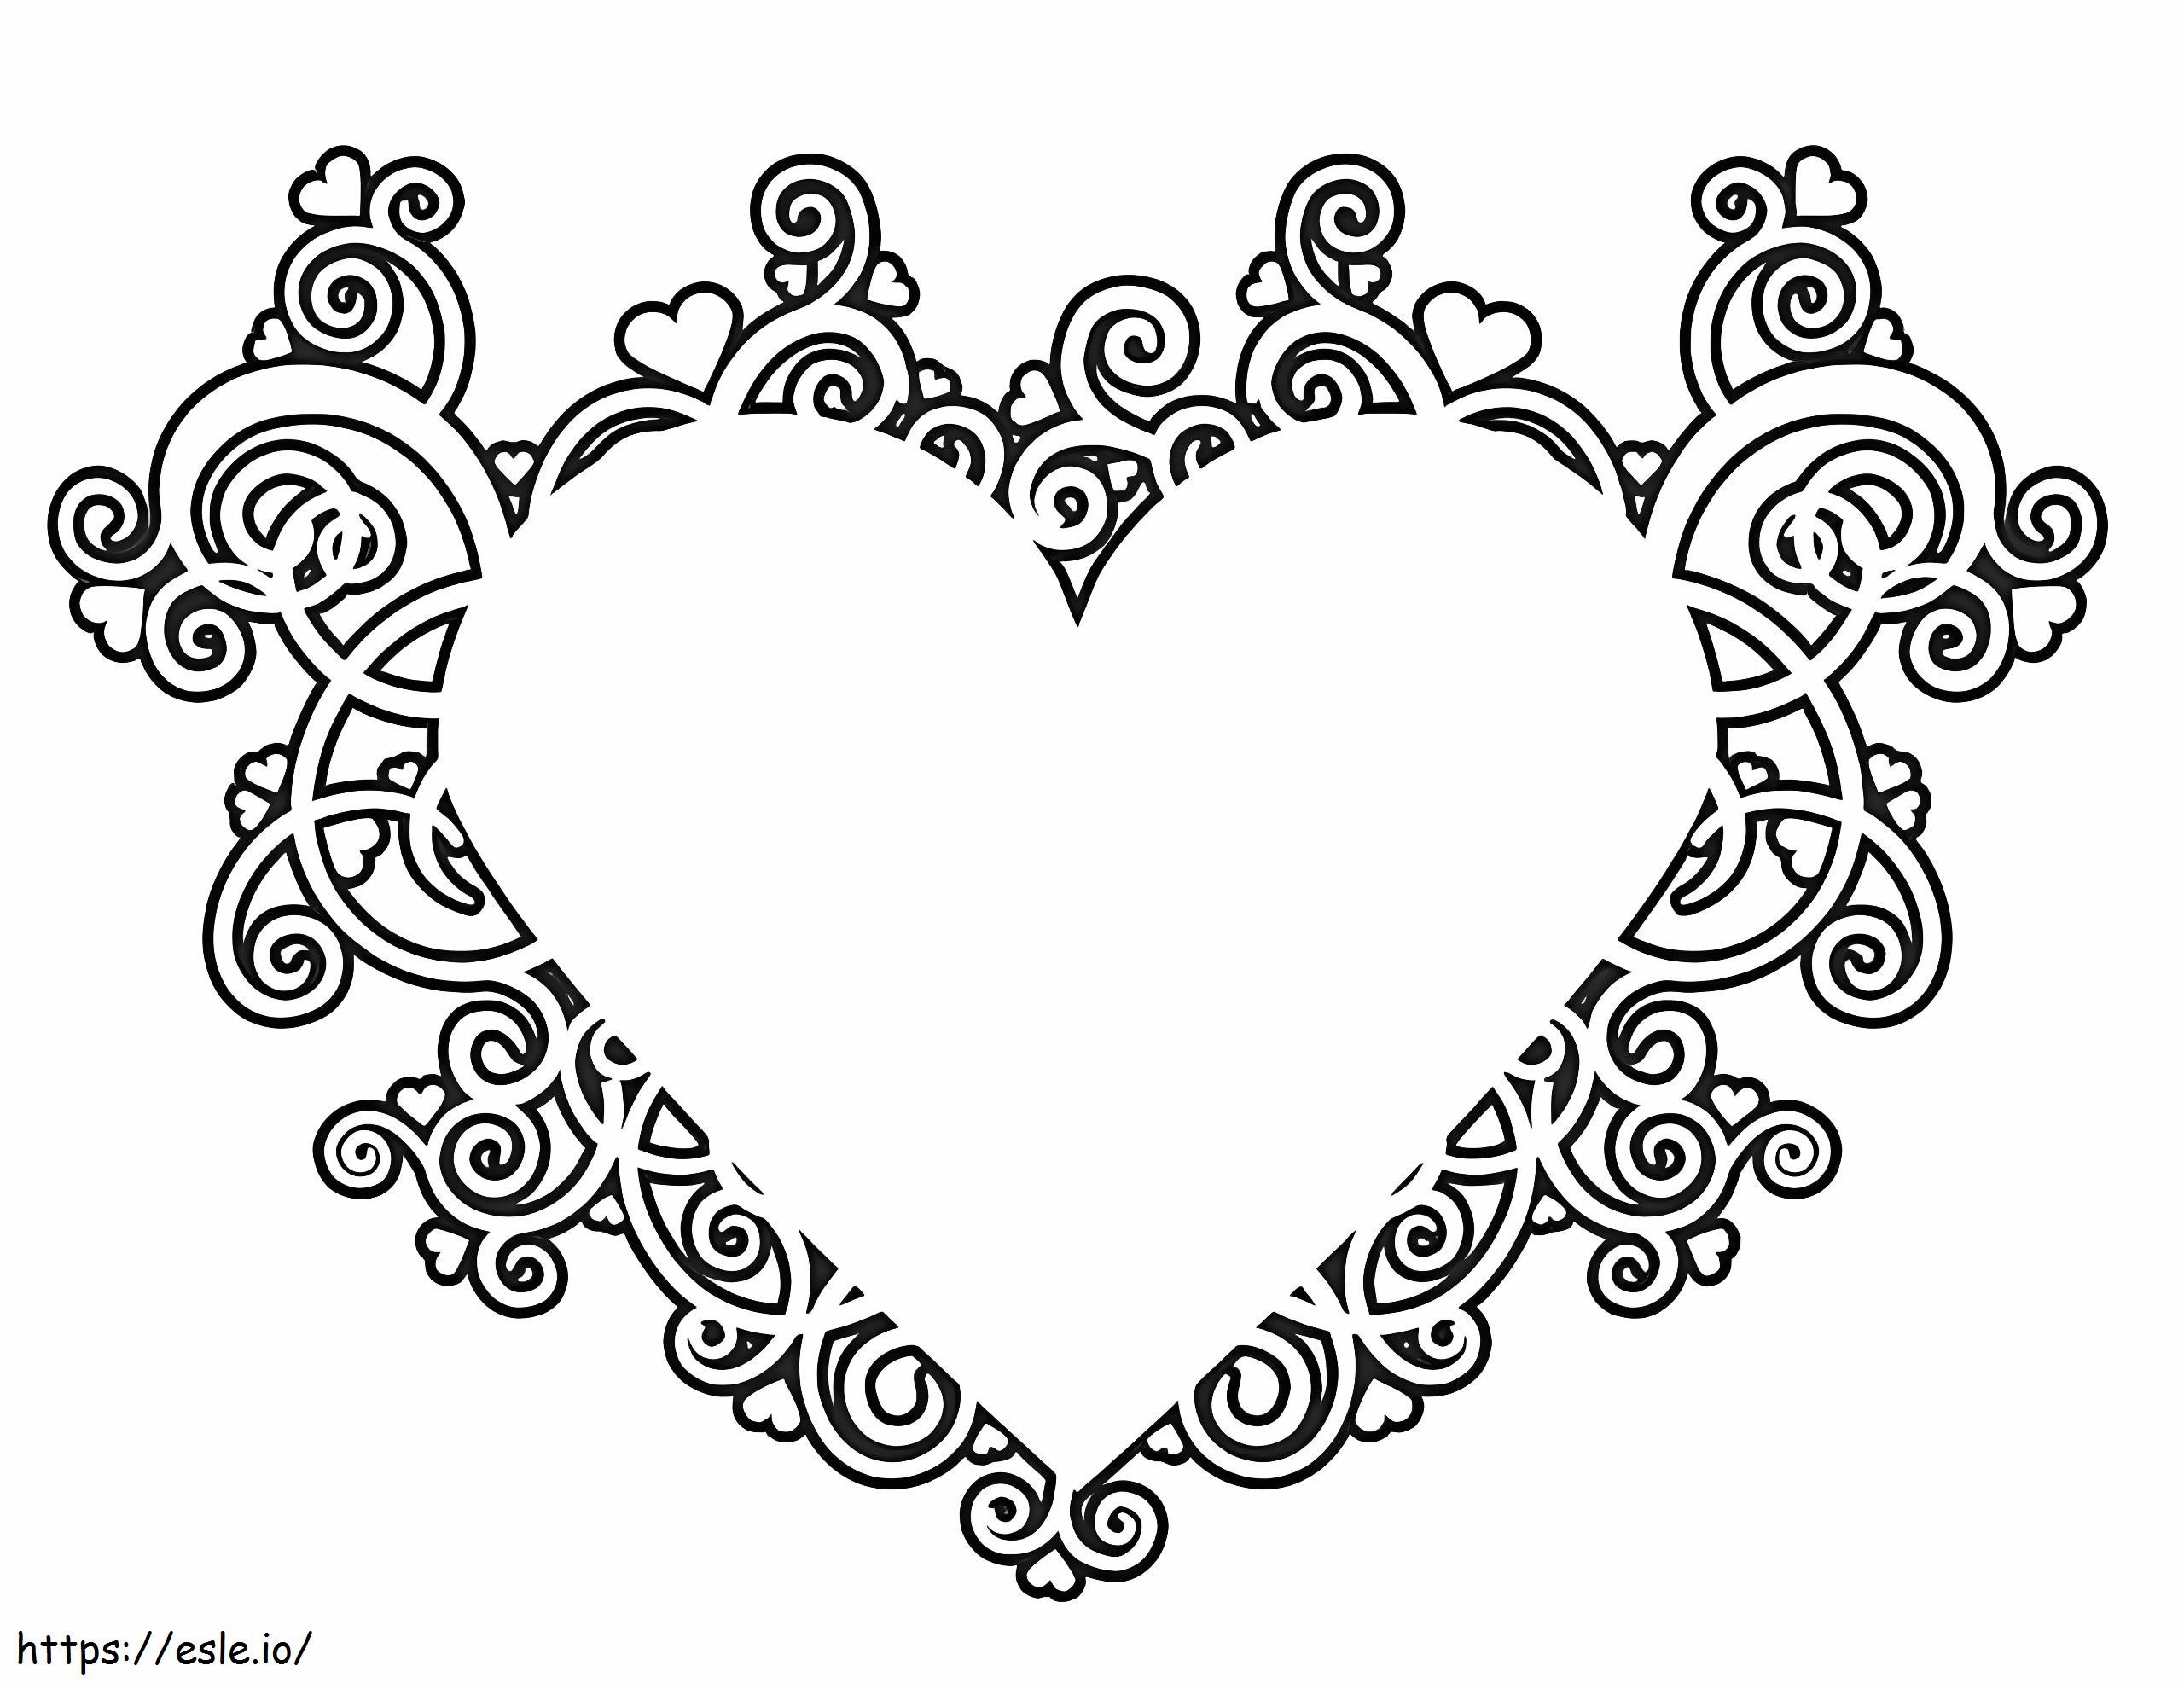 Cute Heart Mandala coloring page